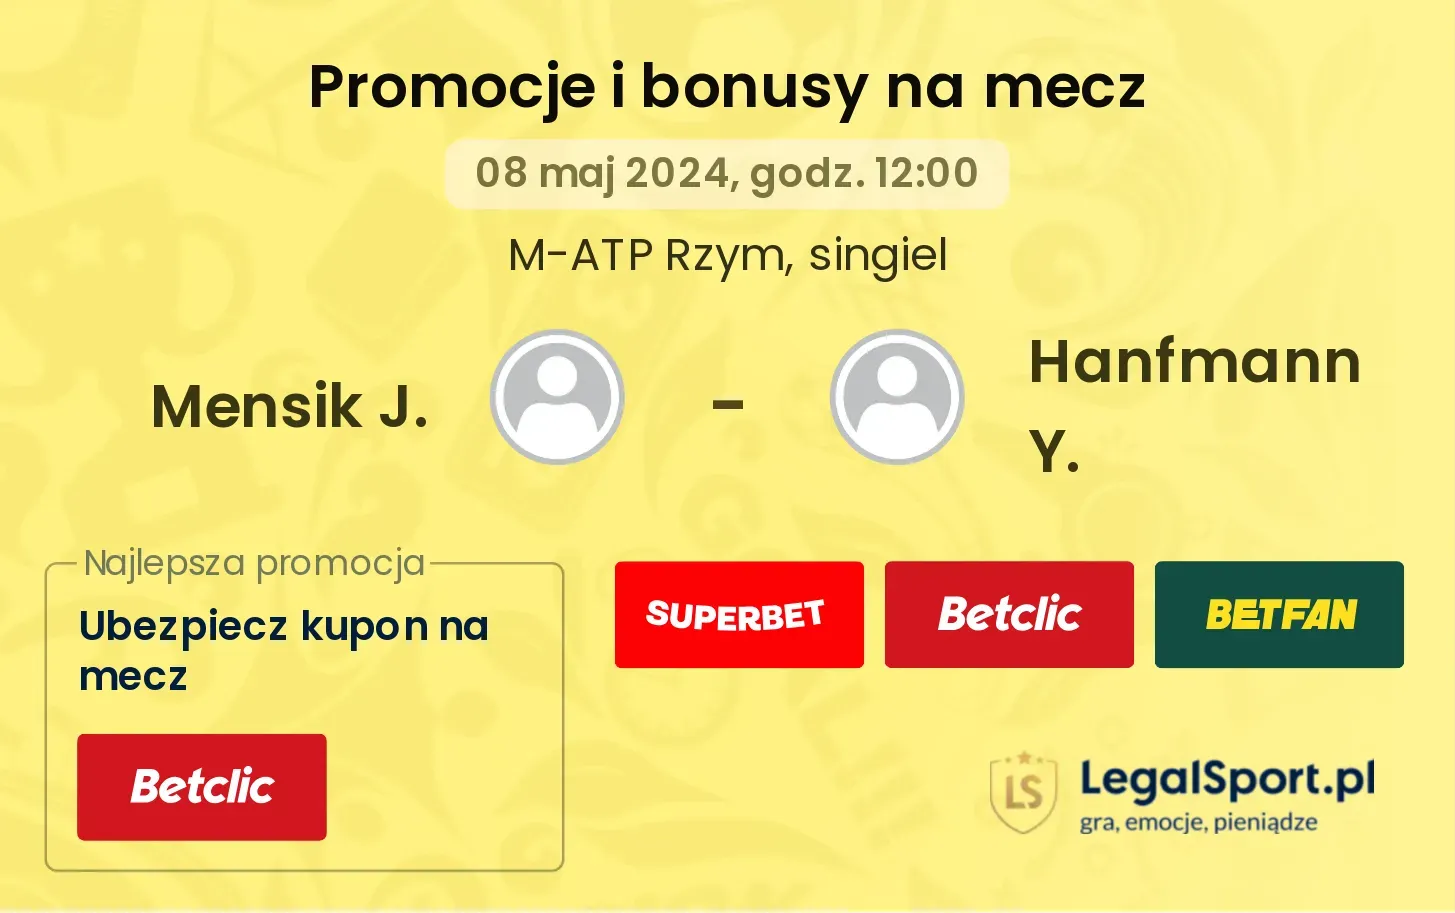 Mensik J. - Hanfmann Y. promocje bonusy na mecz